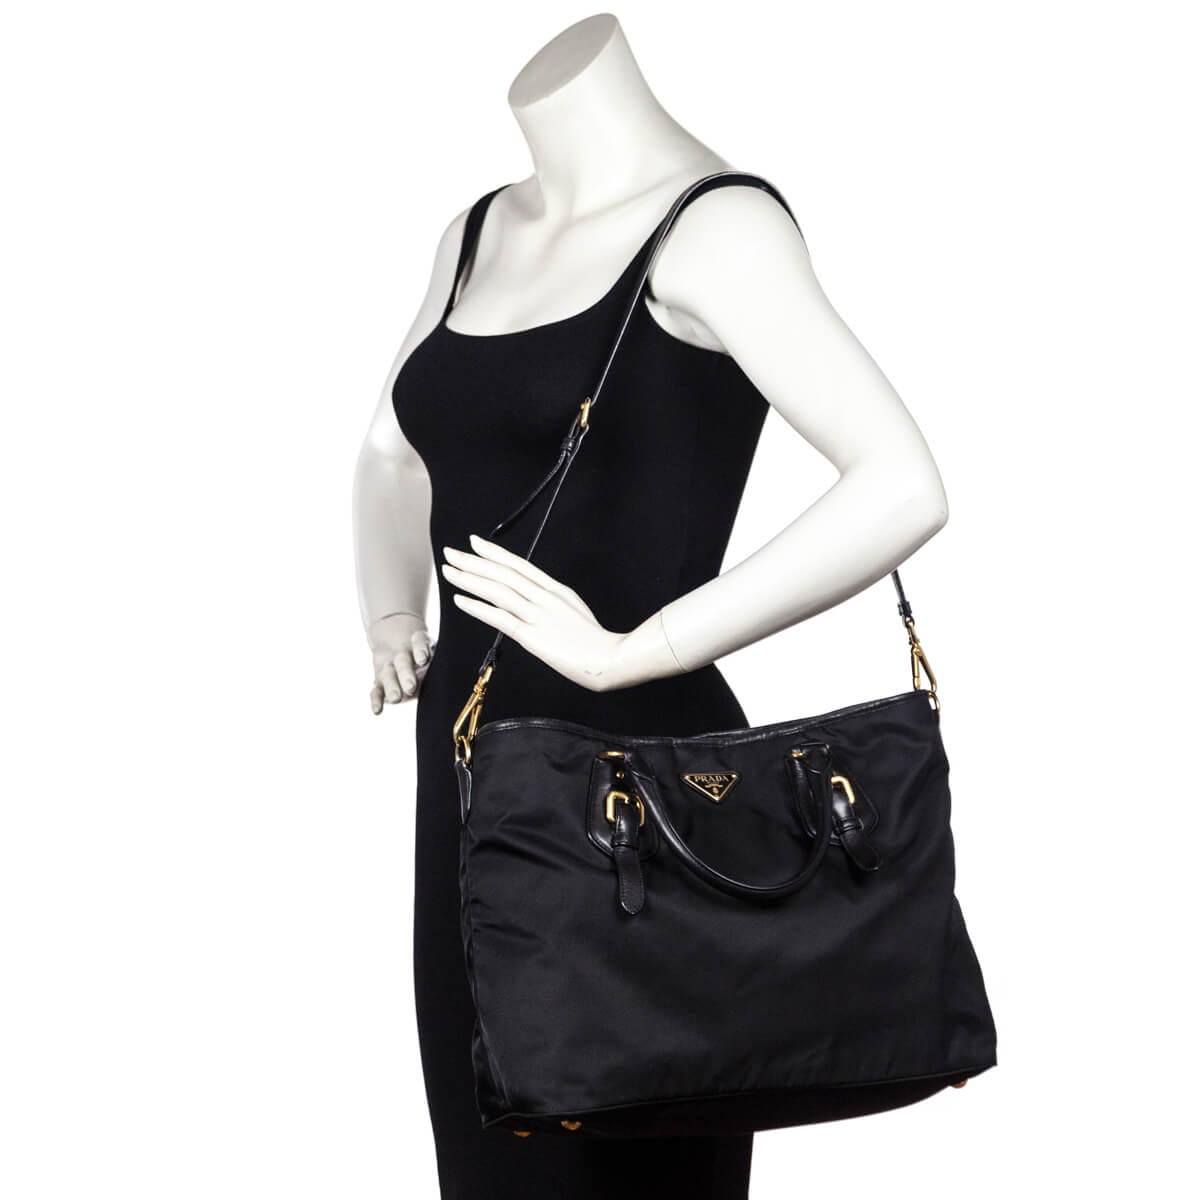 Prada Black & White Calfskin Convertible Handbag QNBFLV3PMB001